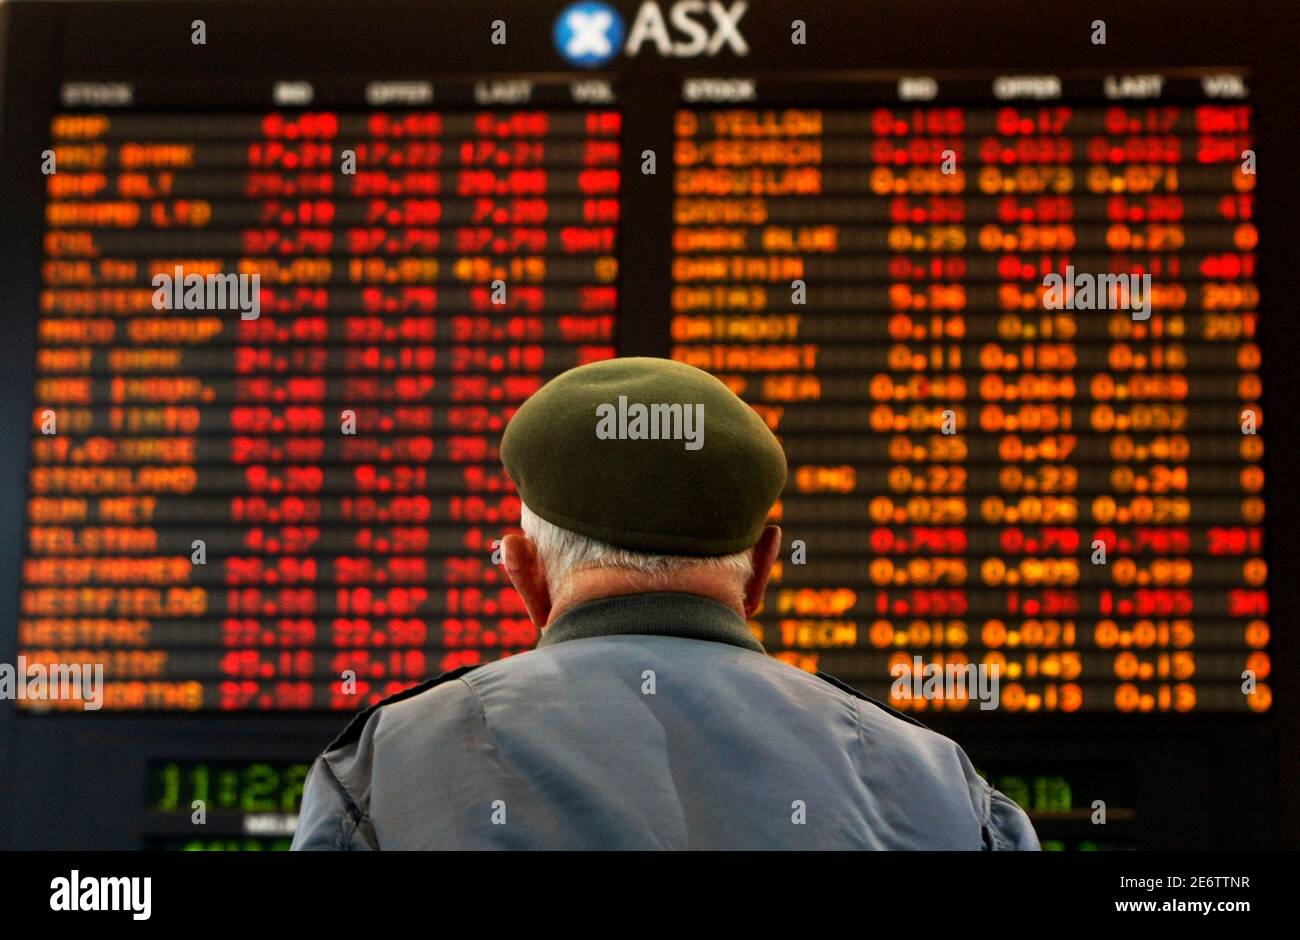 Australian Securities Exchange Stock and Images Alamy